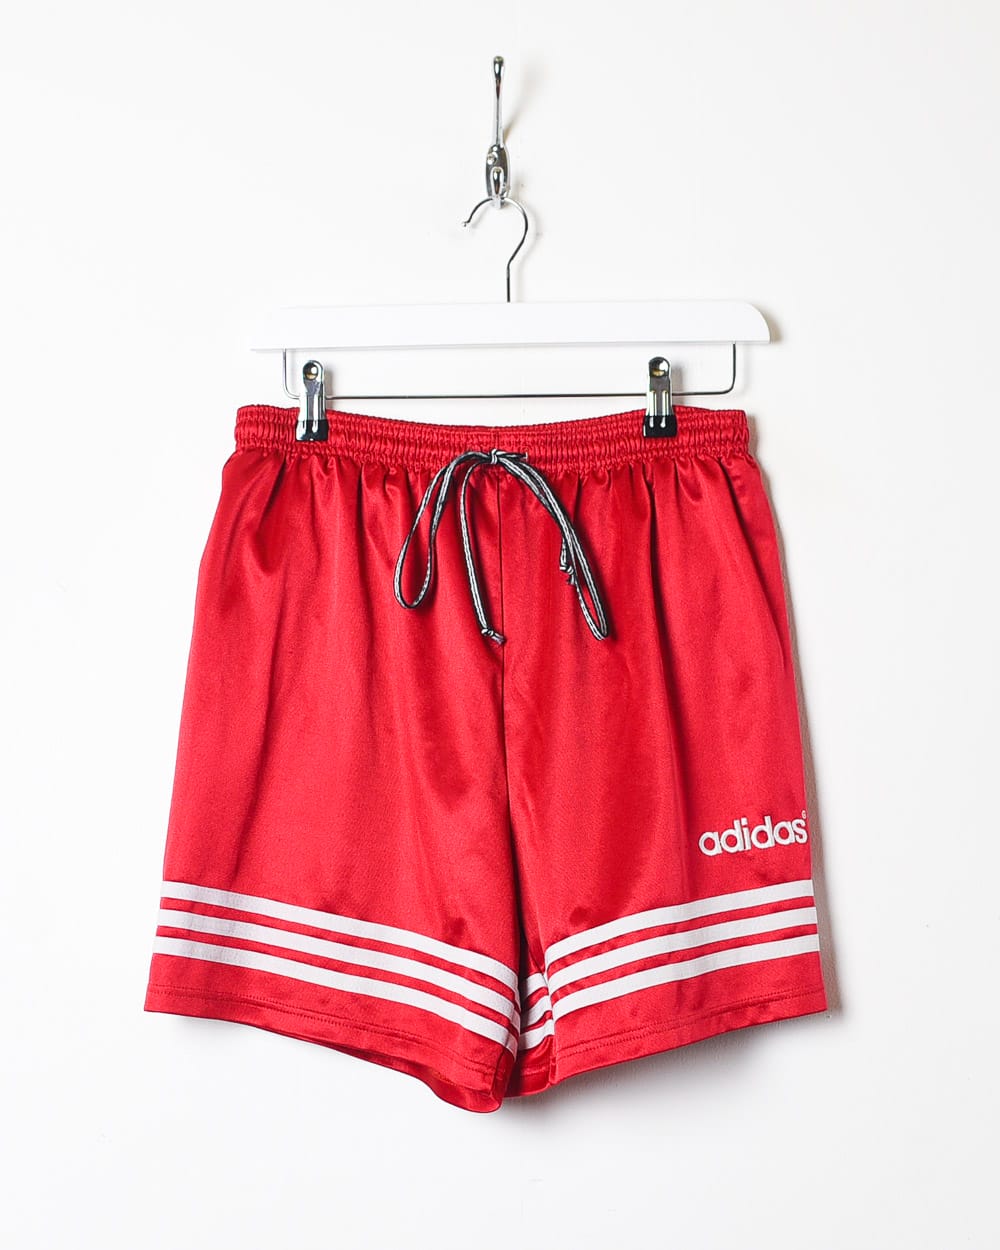 Red Adidas Shorts - Large